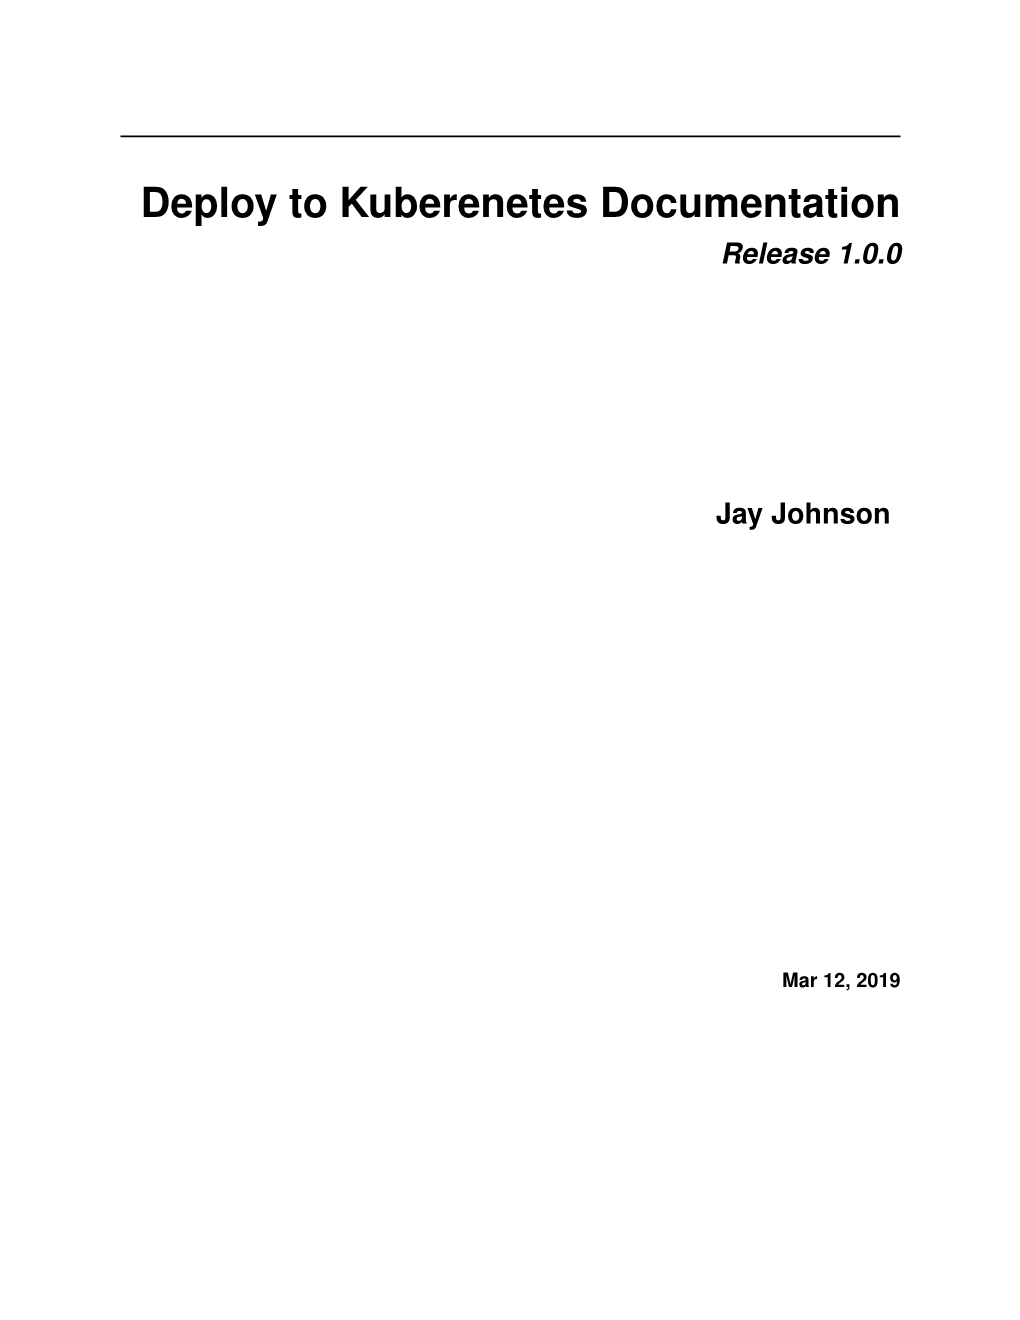 Deploy to Kuberenetes Documentation Release 1.0.0